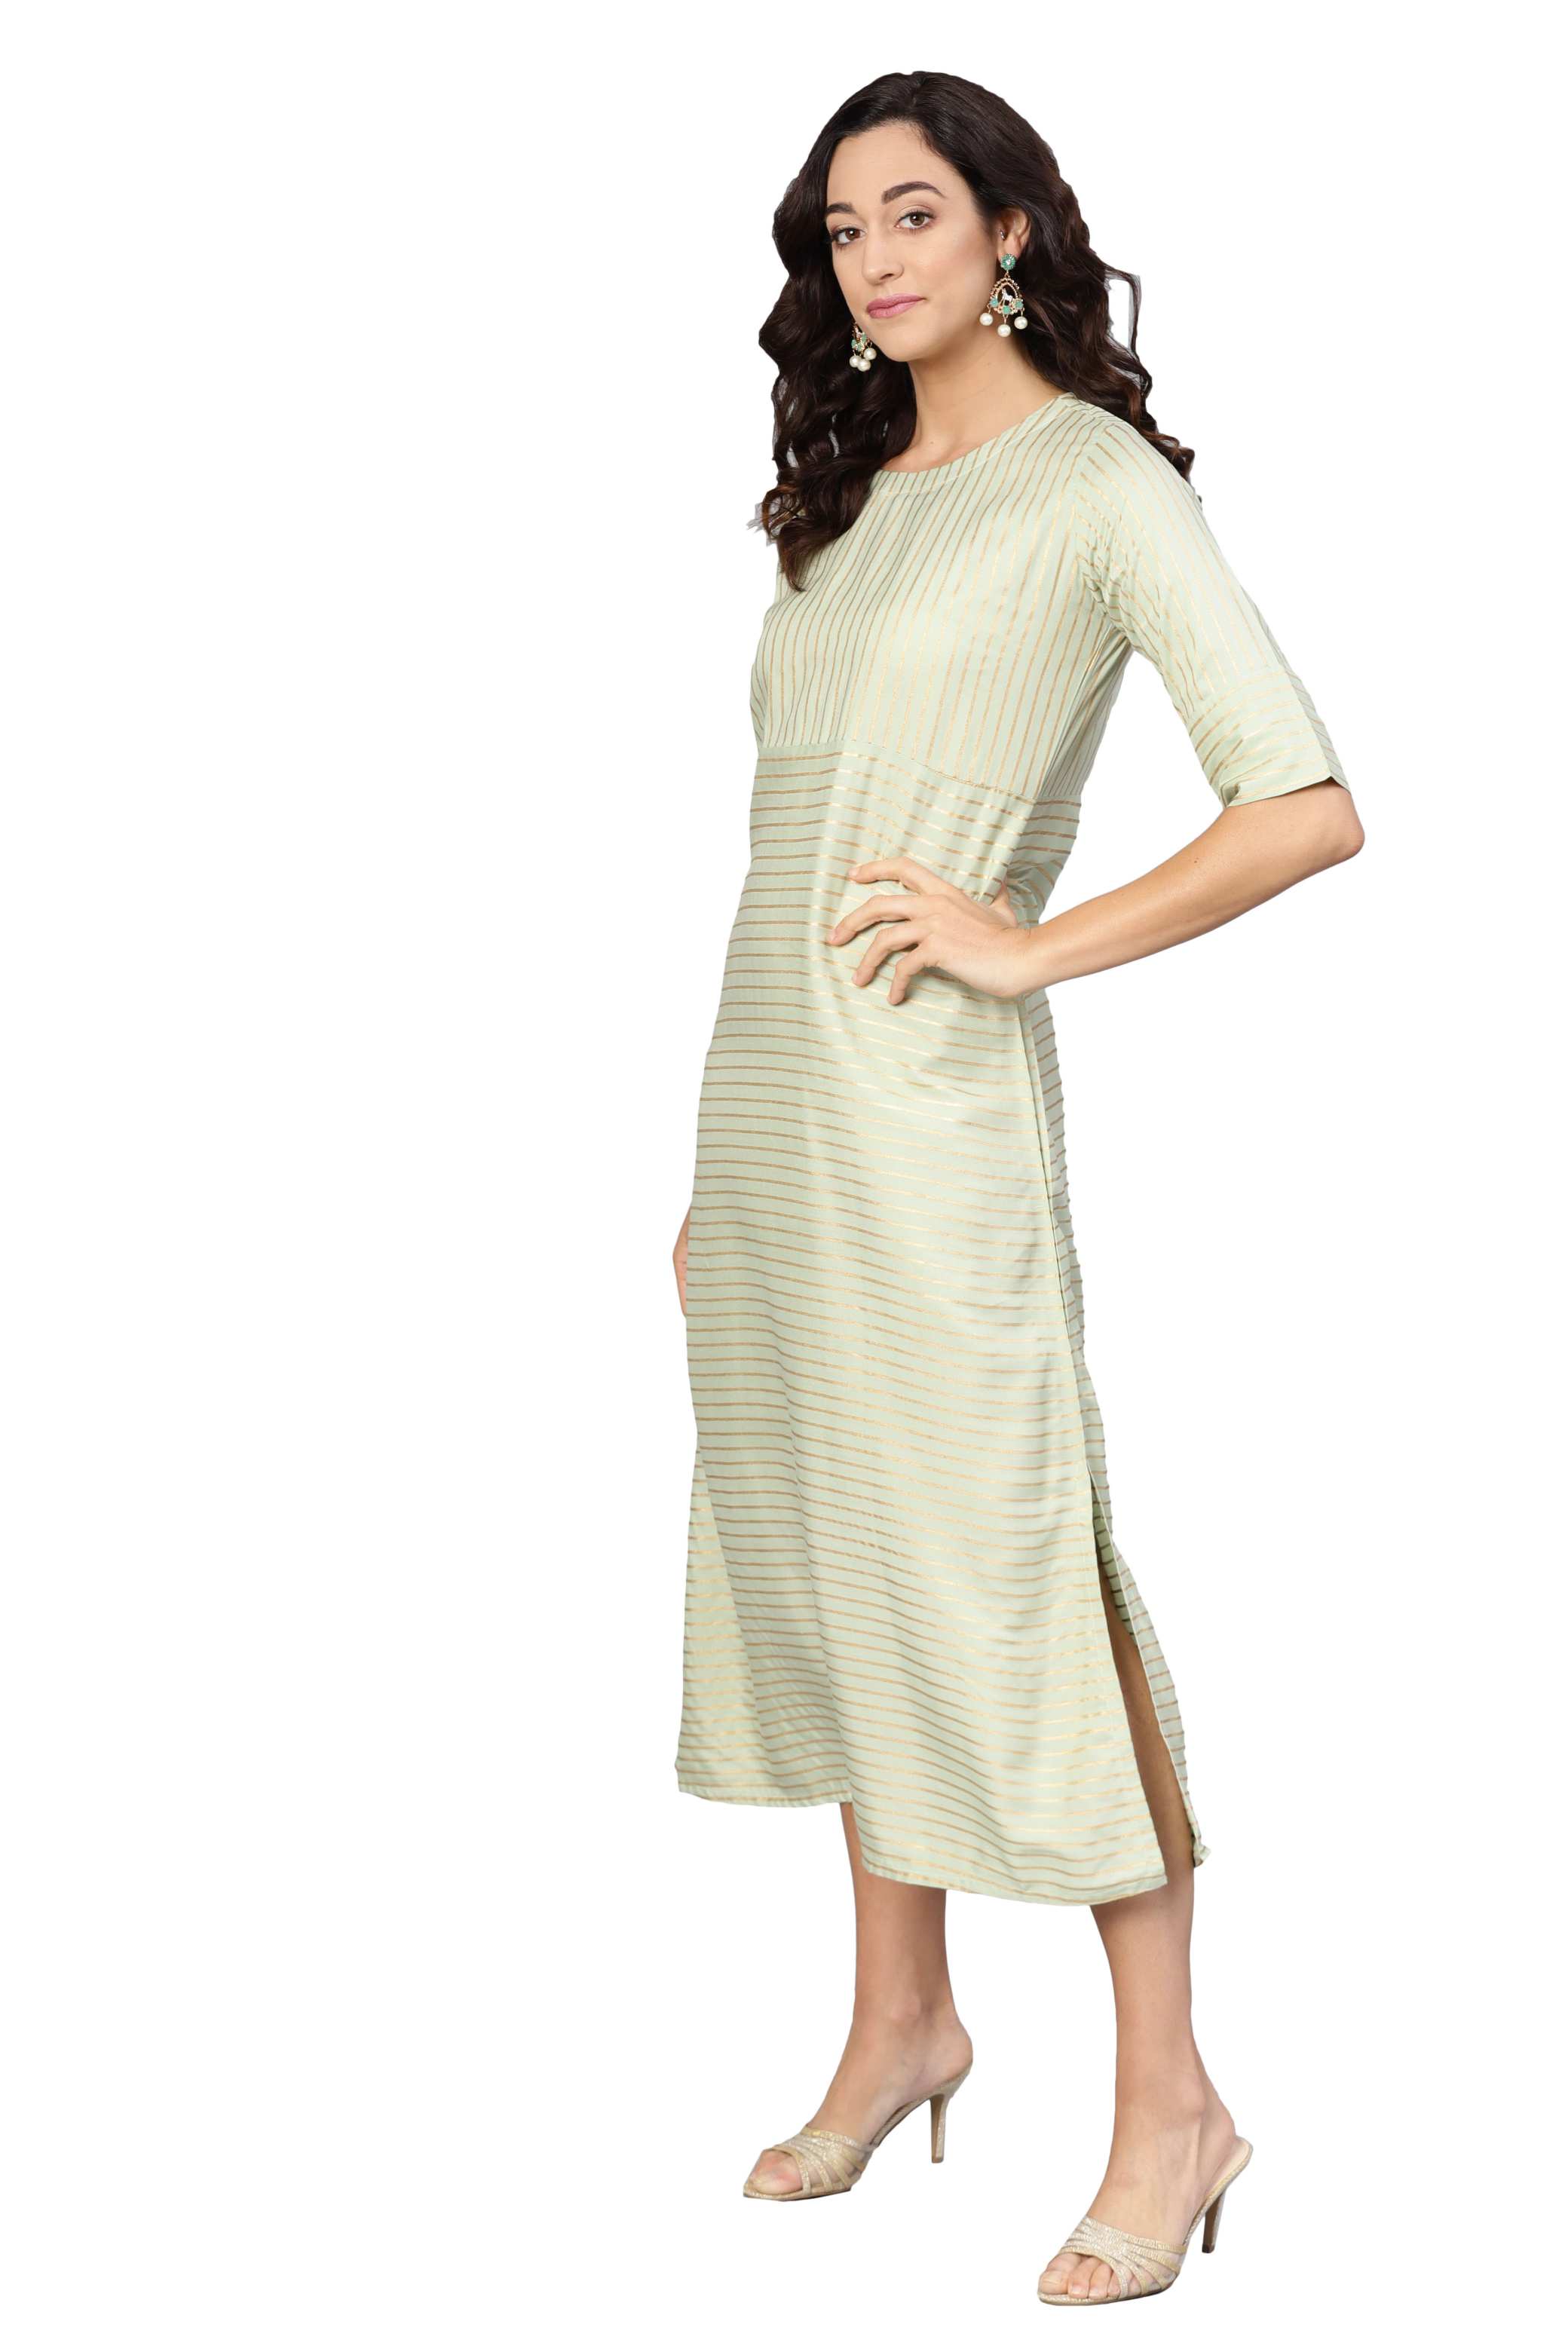 Women's Light Green Rayon Solid Half Sleeve Round Neck Dress - Myshka